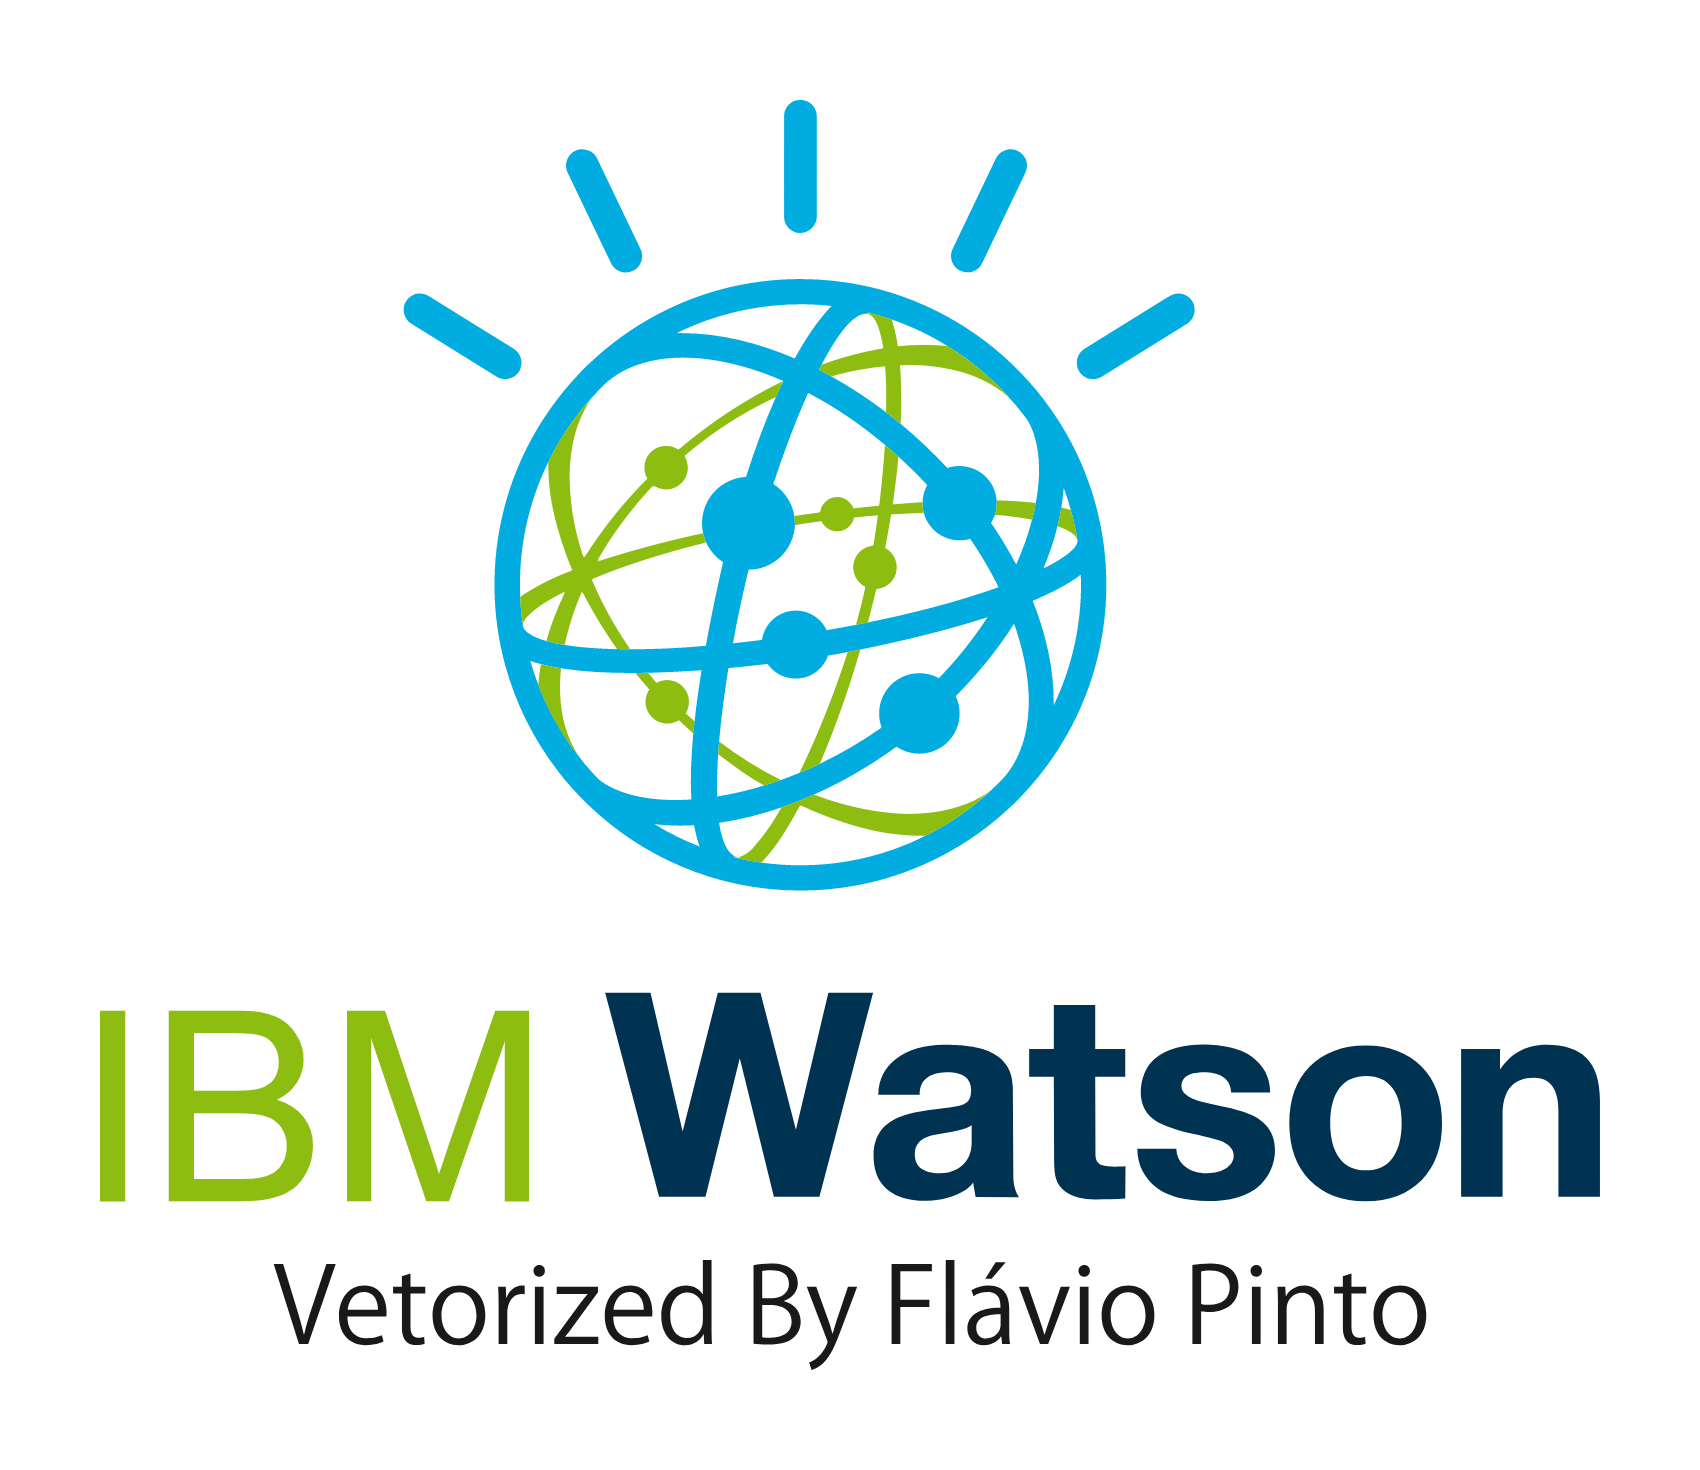 Download IBM Watson Logo PNG and Vector (PDF, SVG, Ai, EPS) Free